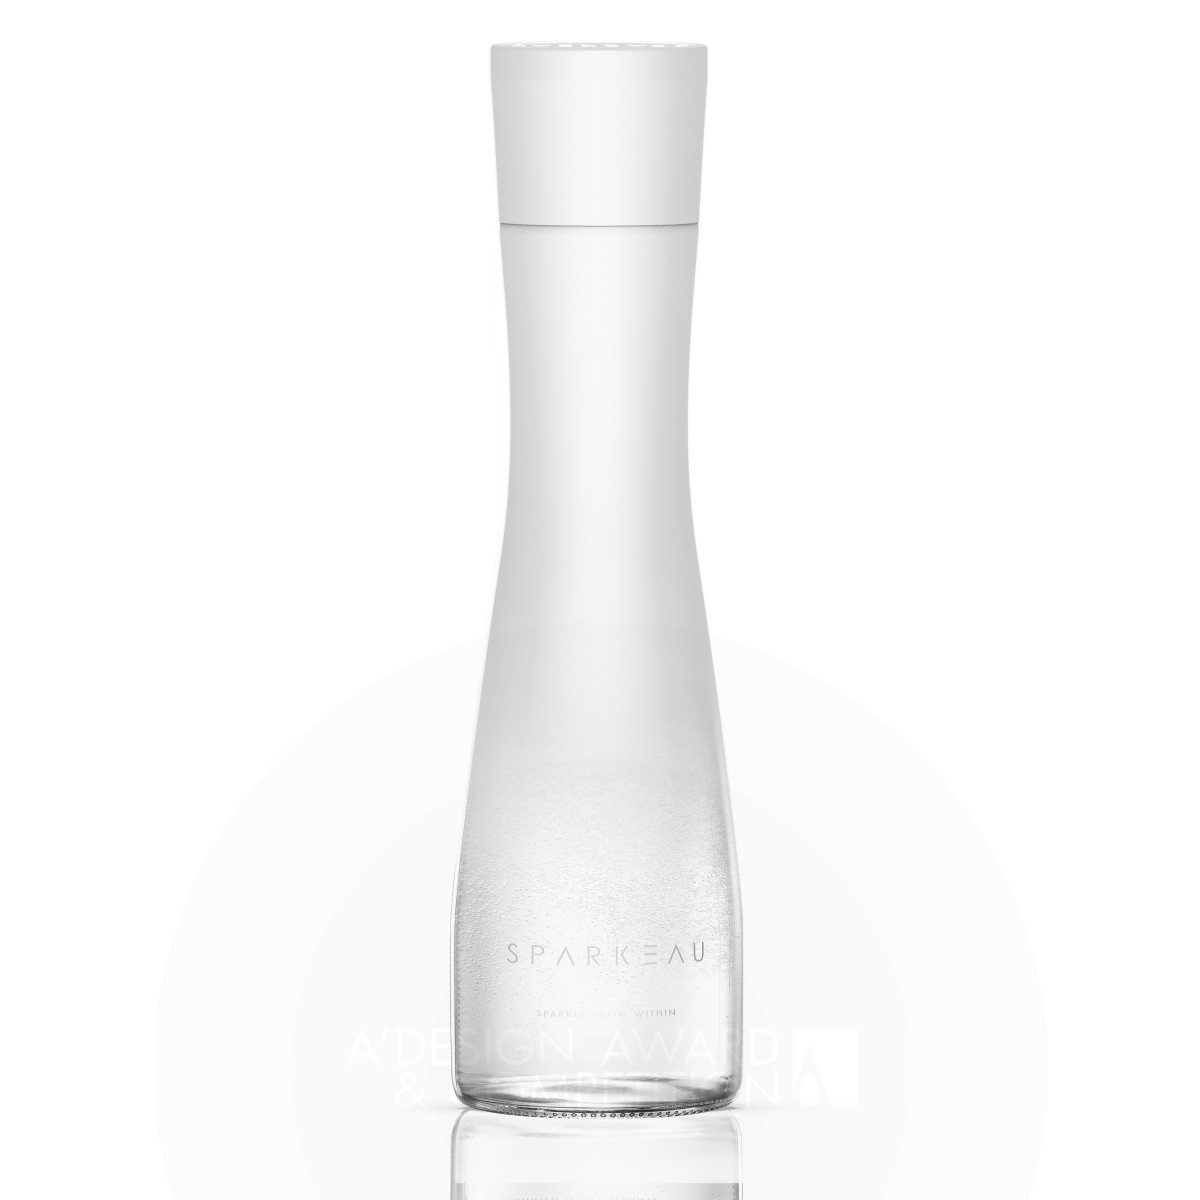 Sparkeau <b>Sparkling Water Bottle